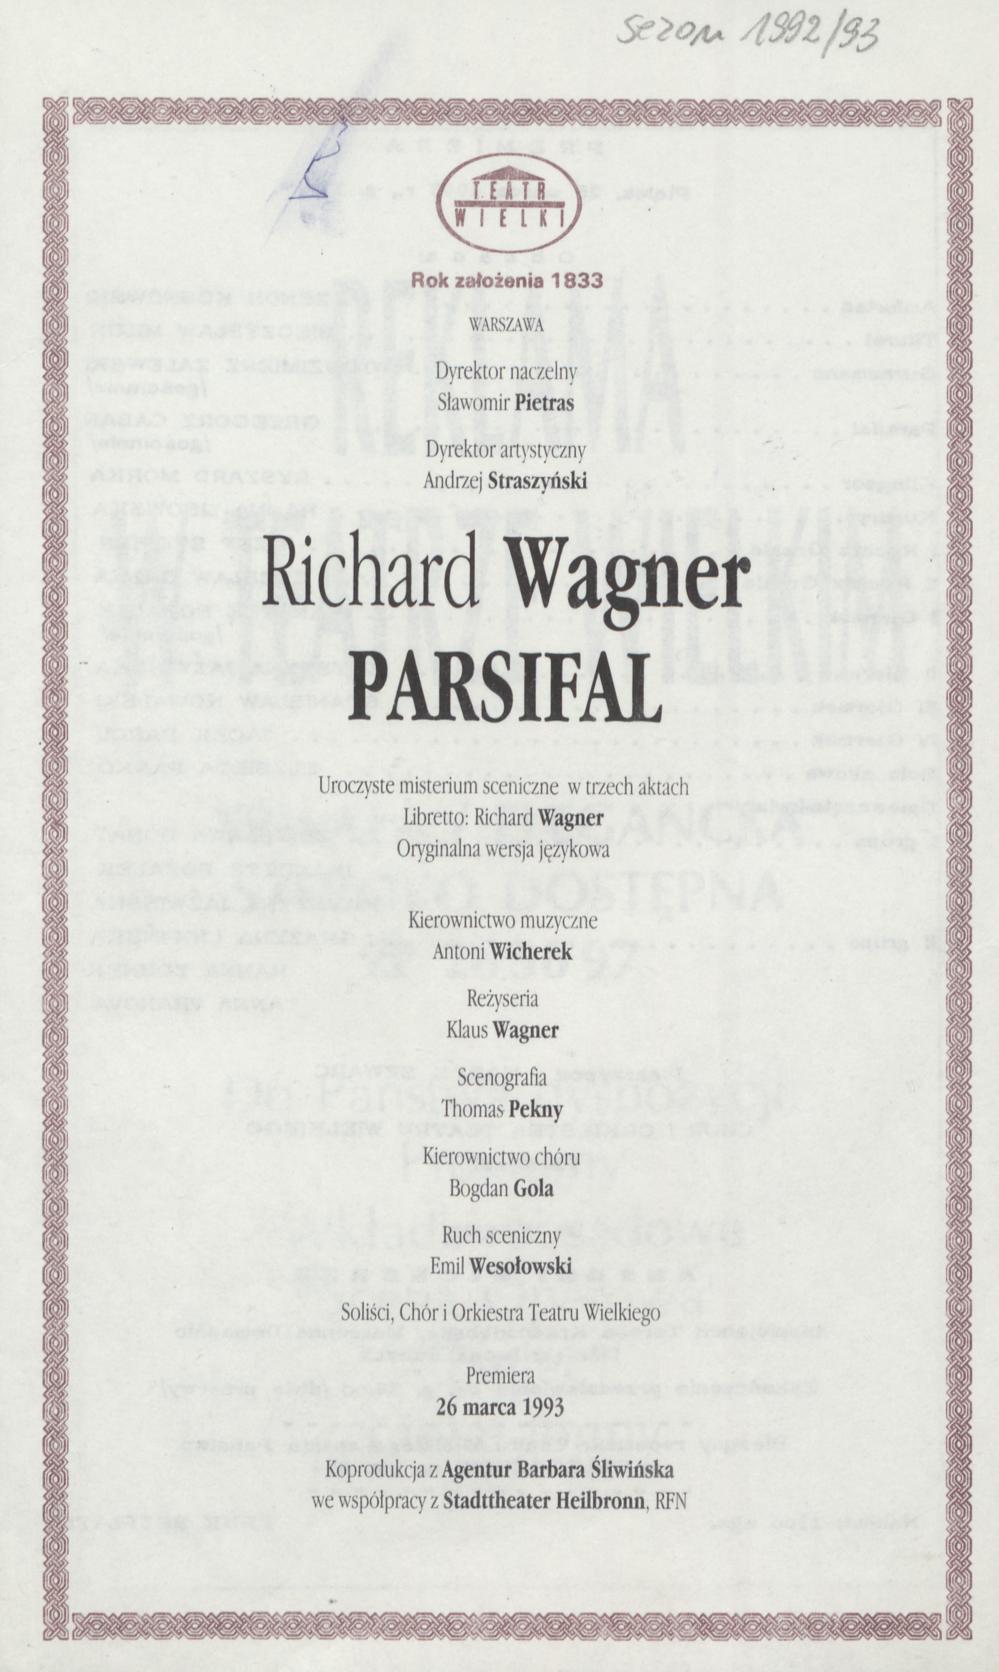 Wkładka premierowa „Parsifal” Richard Wagner 26-03-1993